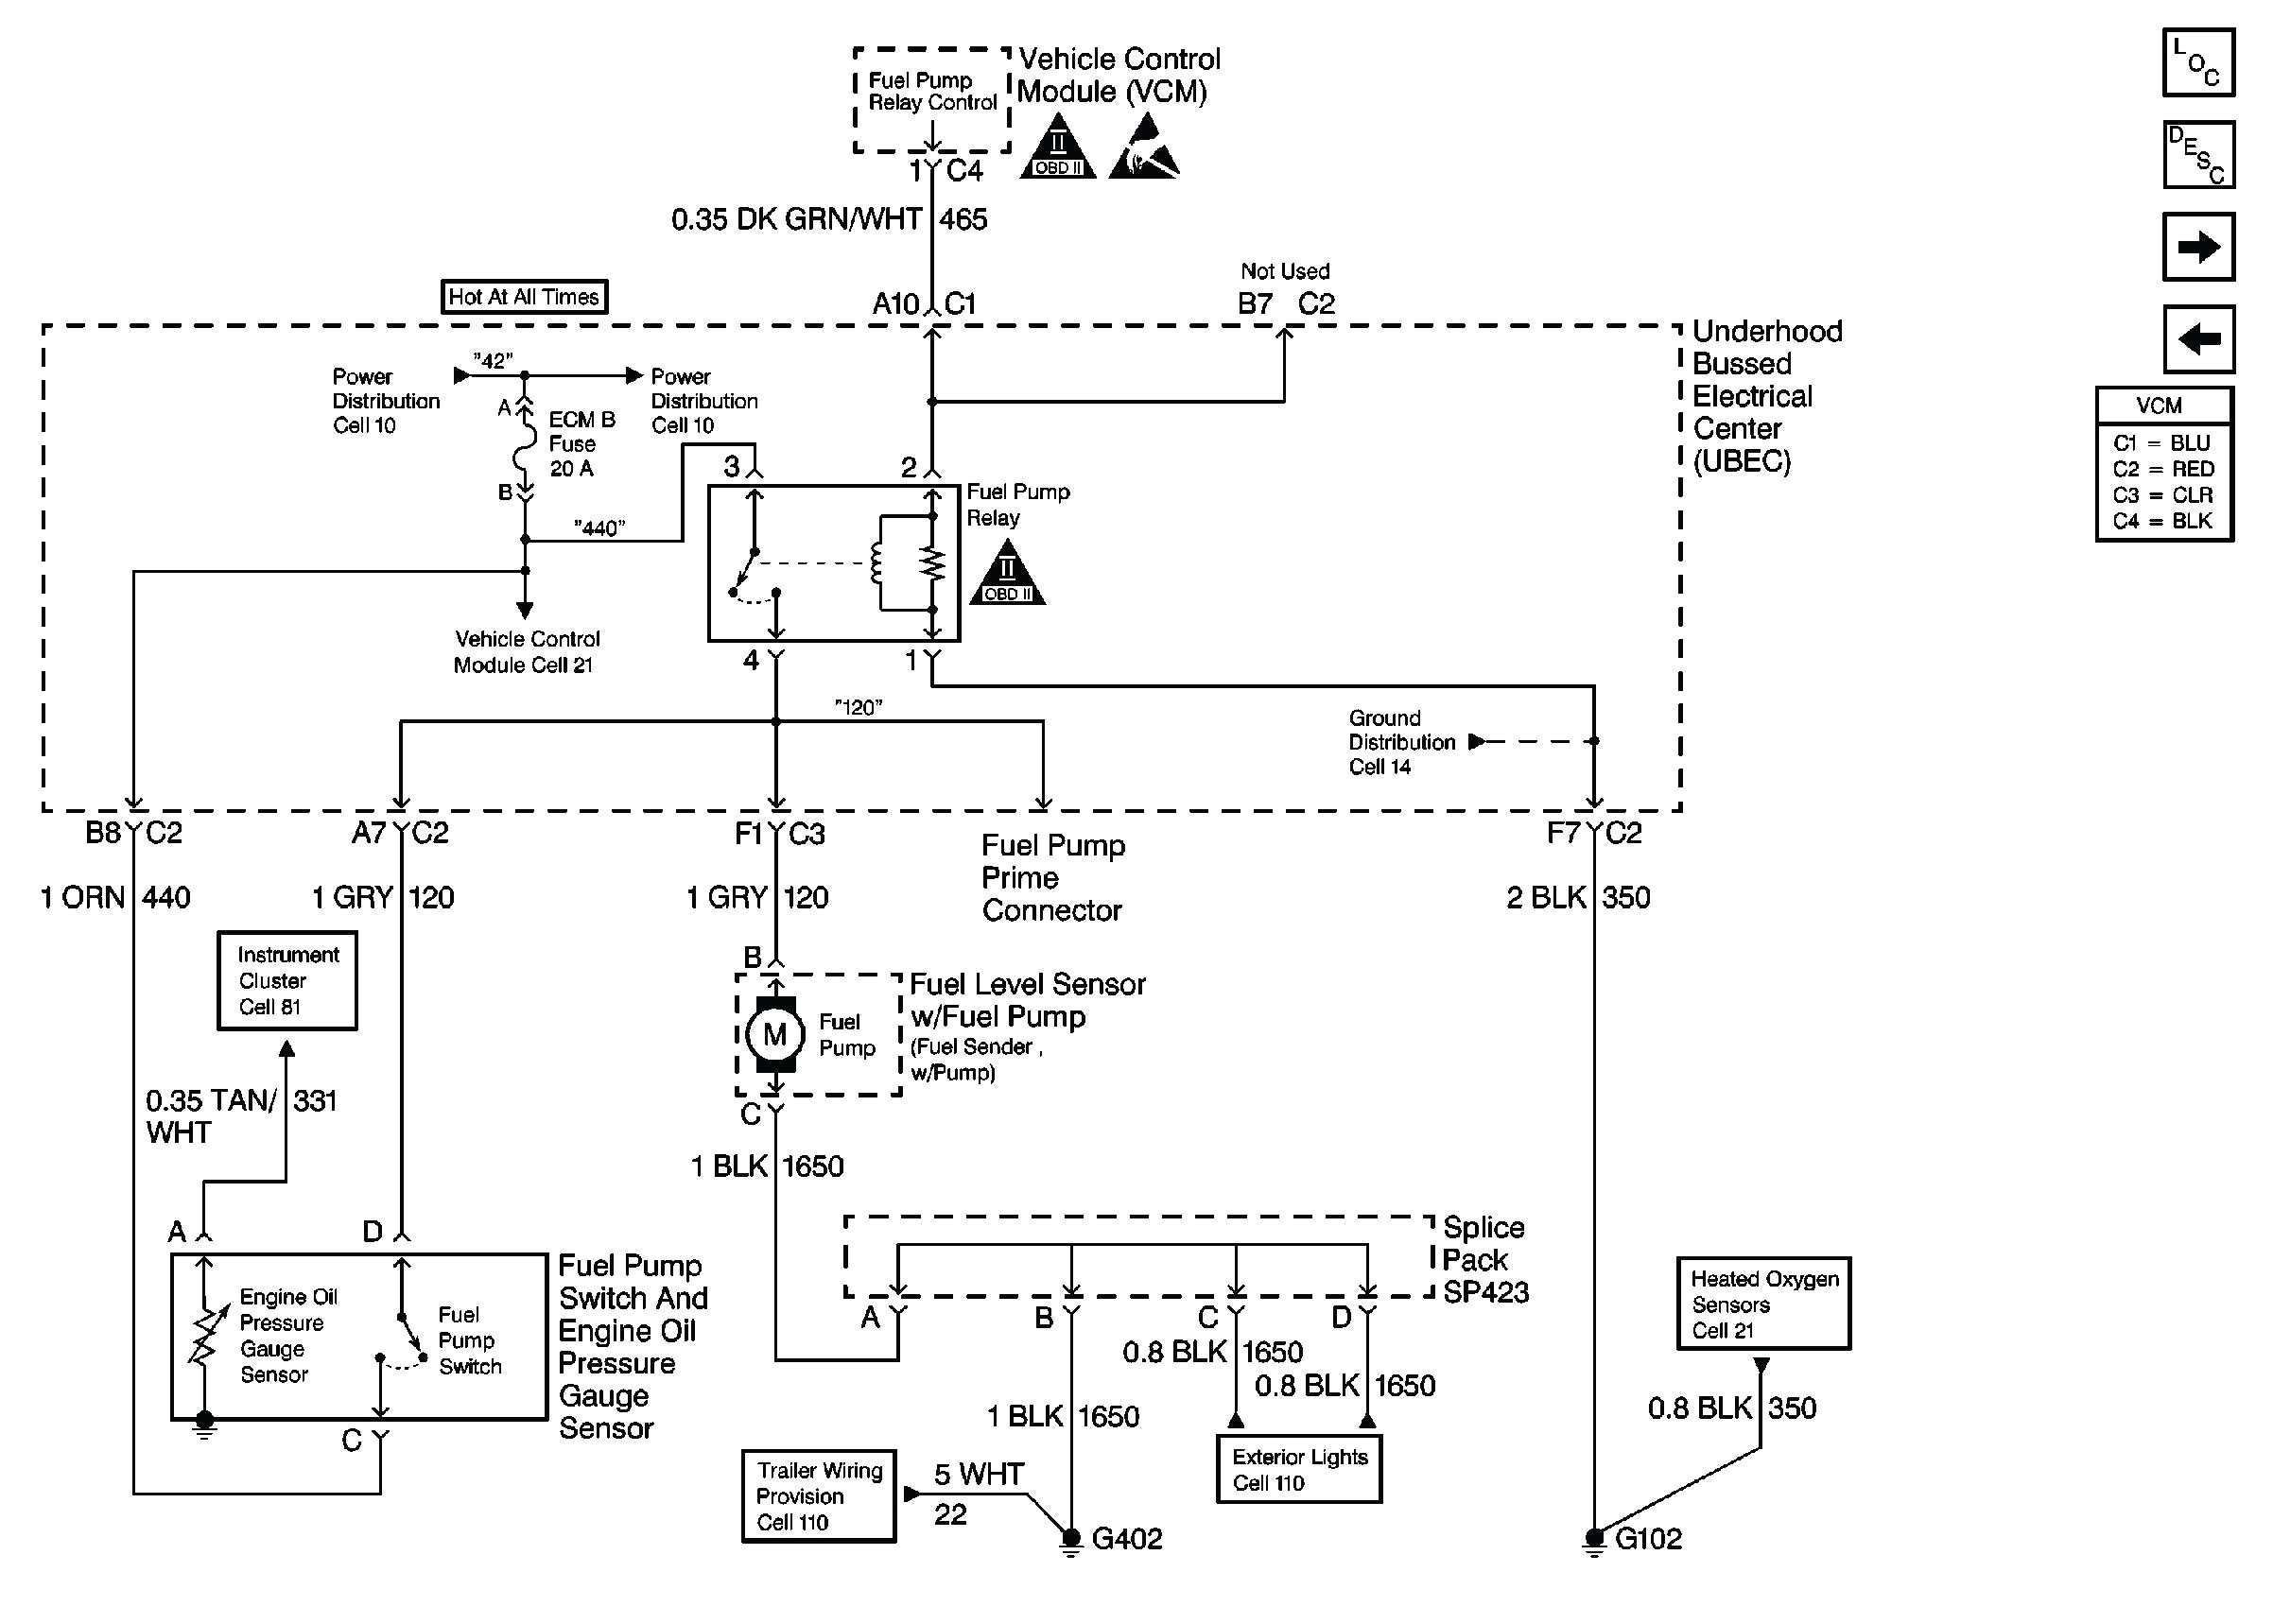 apexi vafc wiring diagram apexi vafc wiring diagram amazing apexiapexi vafc wiring diagram apexi vafc wiring